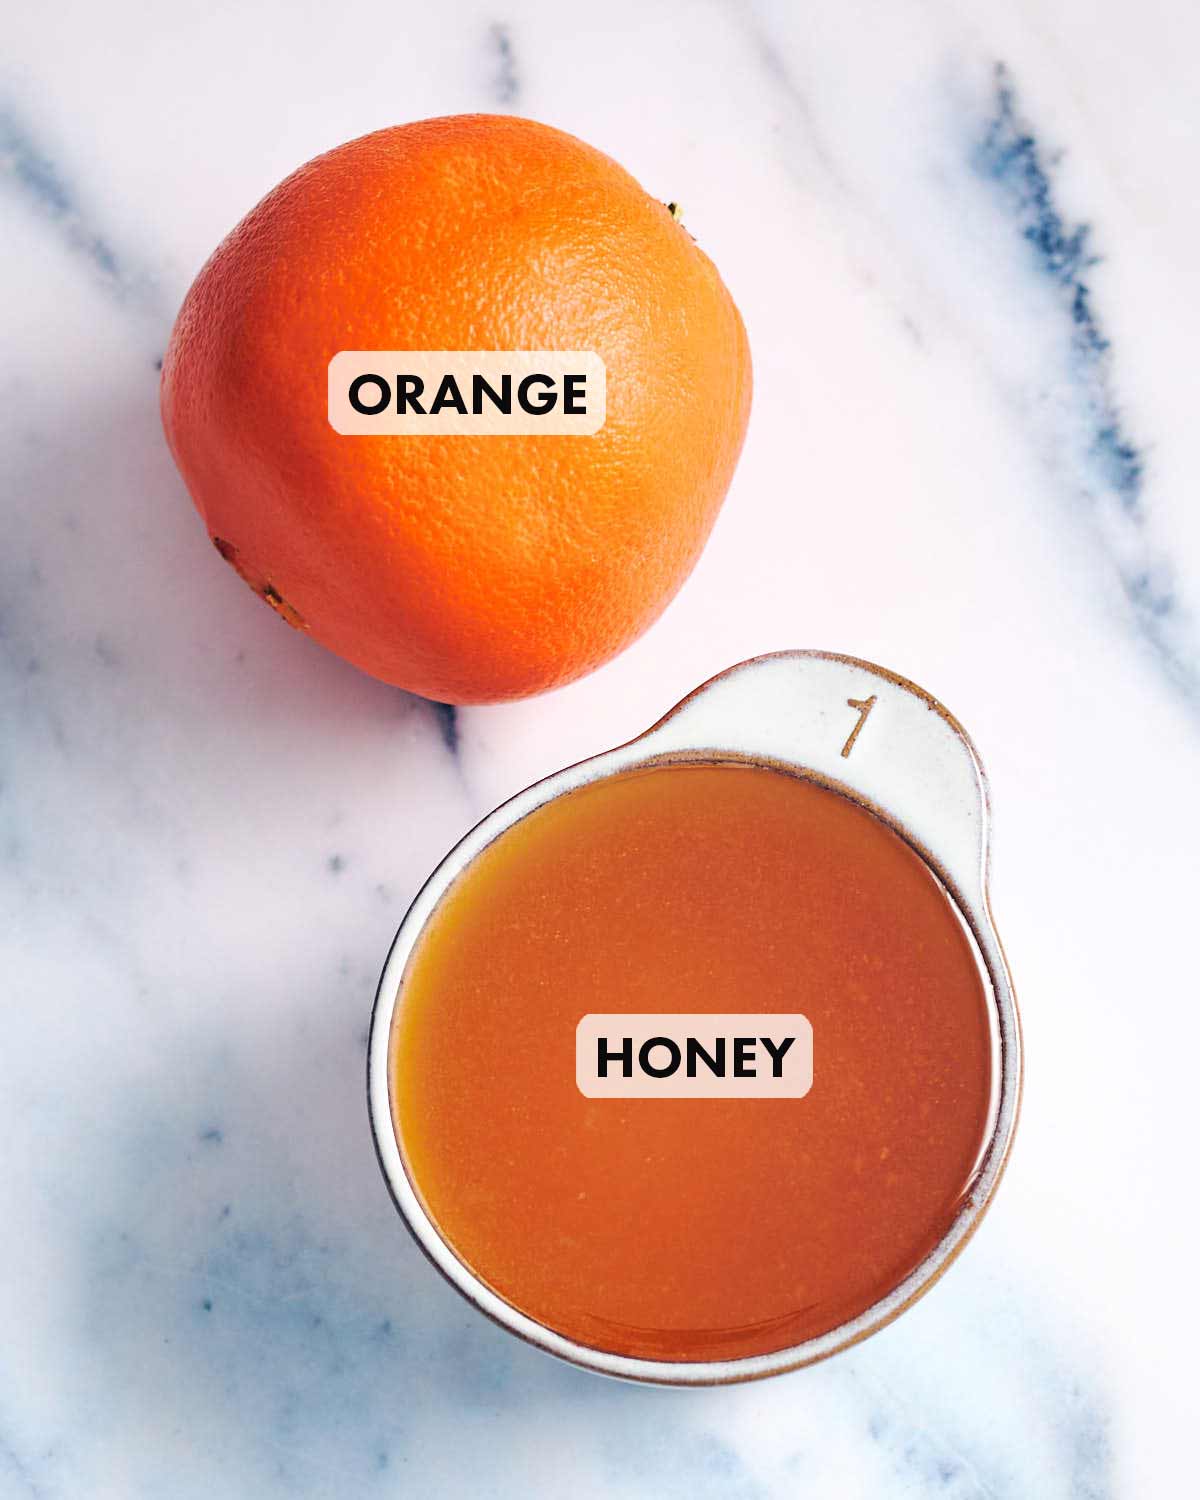 Ingredients to make orange honey, including a fresh orange.